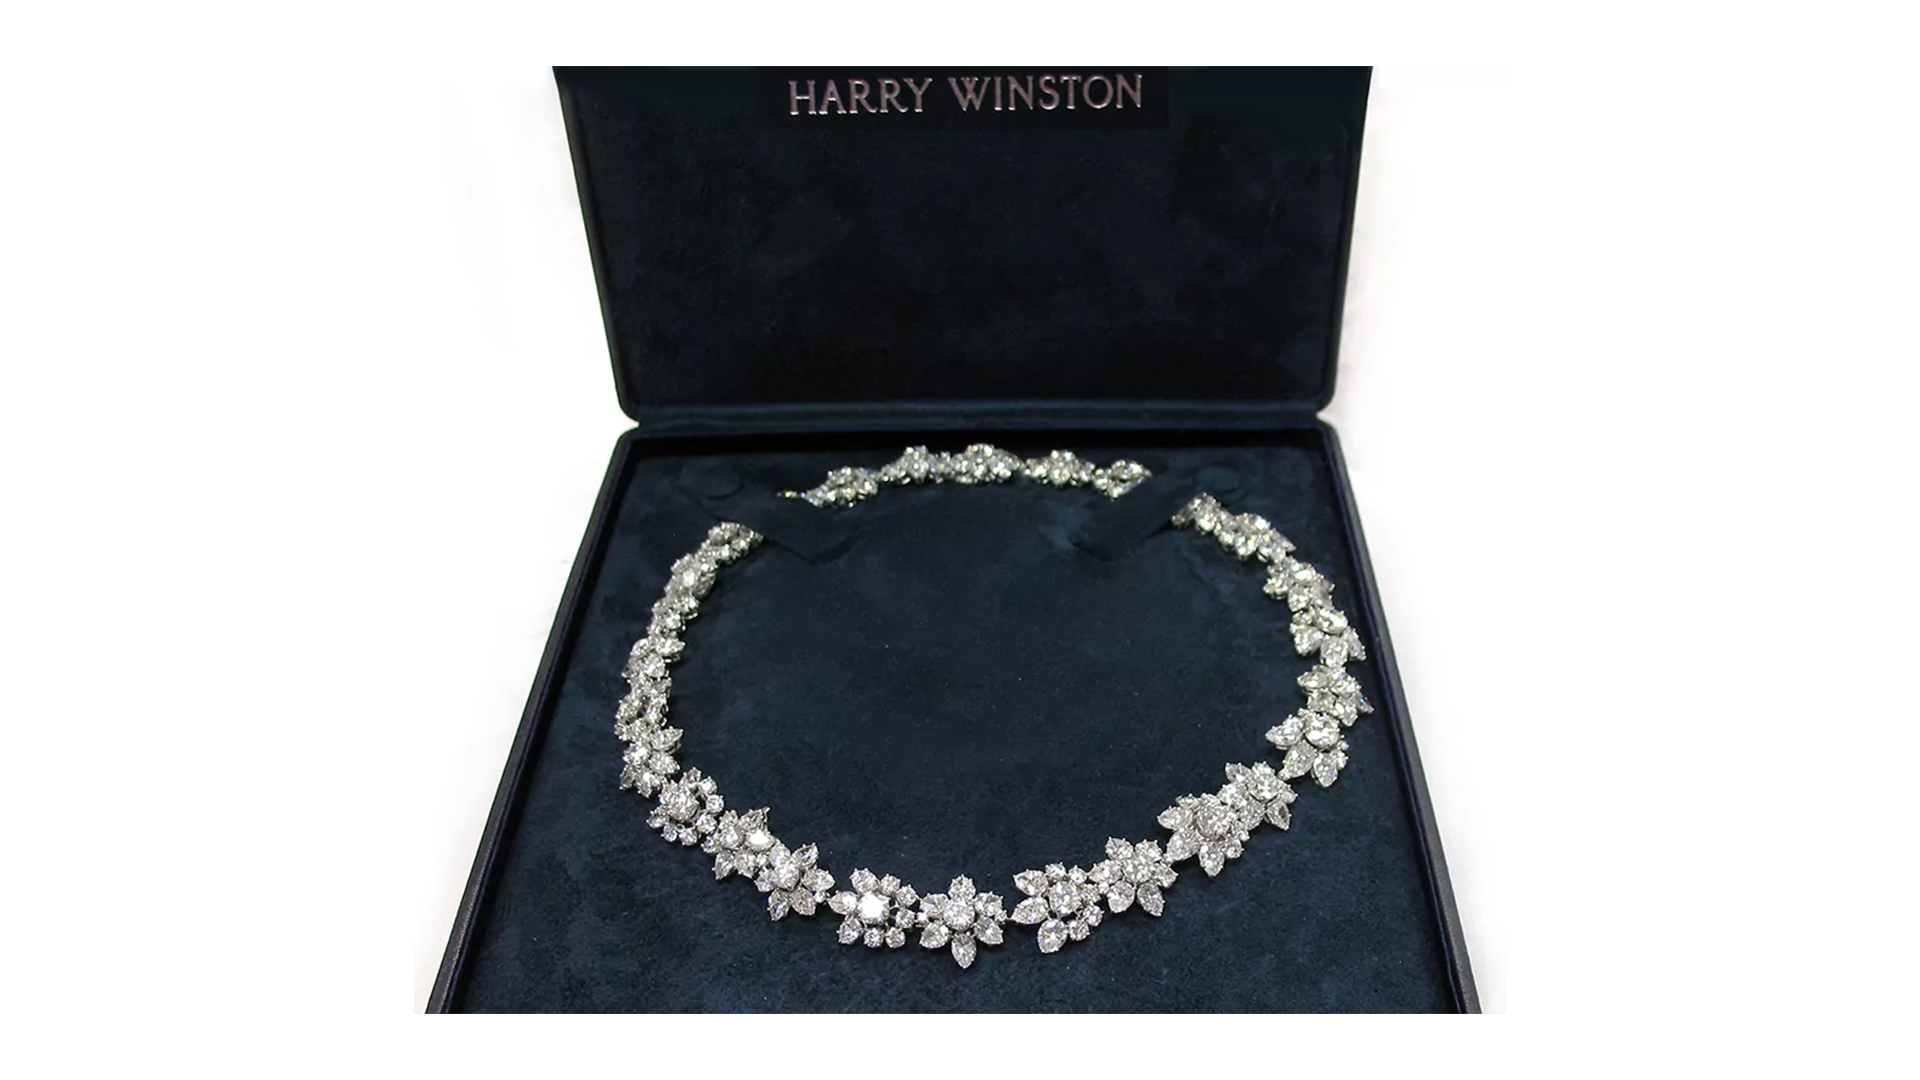 Harry Winston: A Diamond Legacy